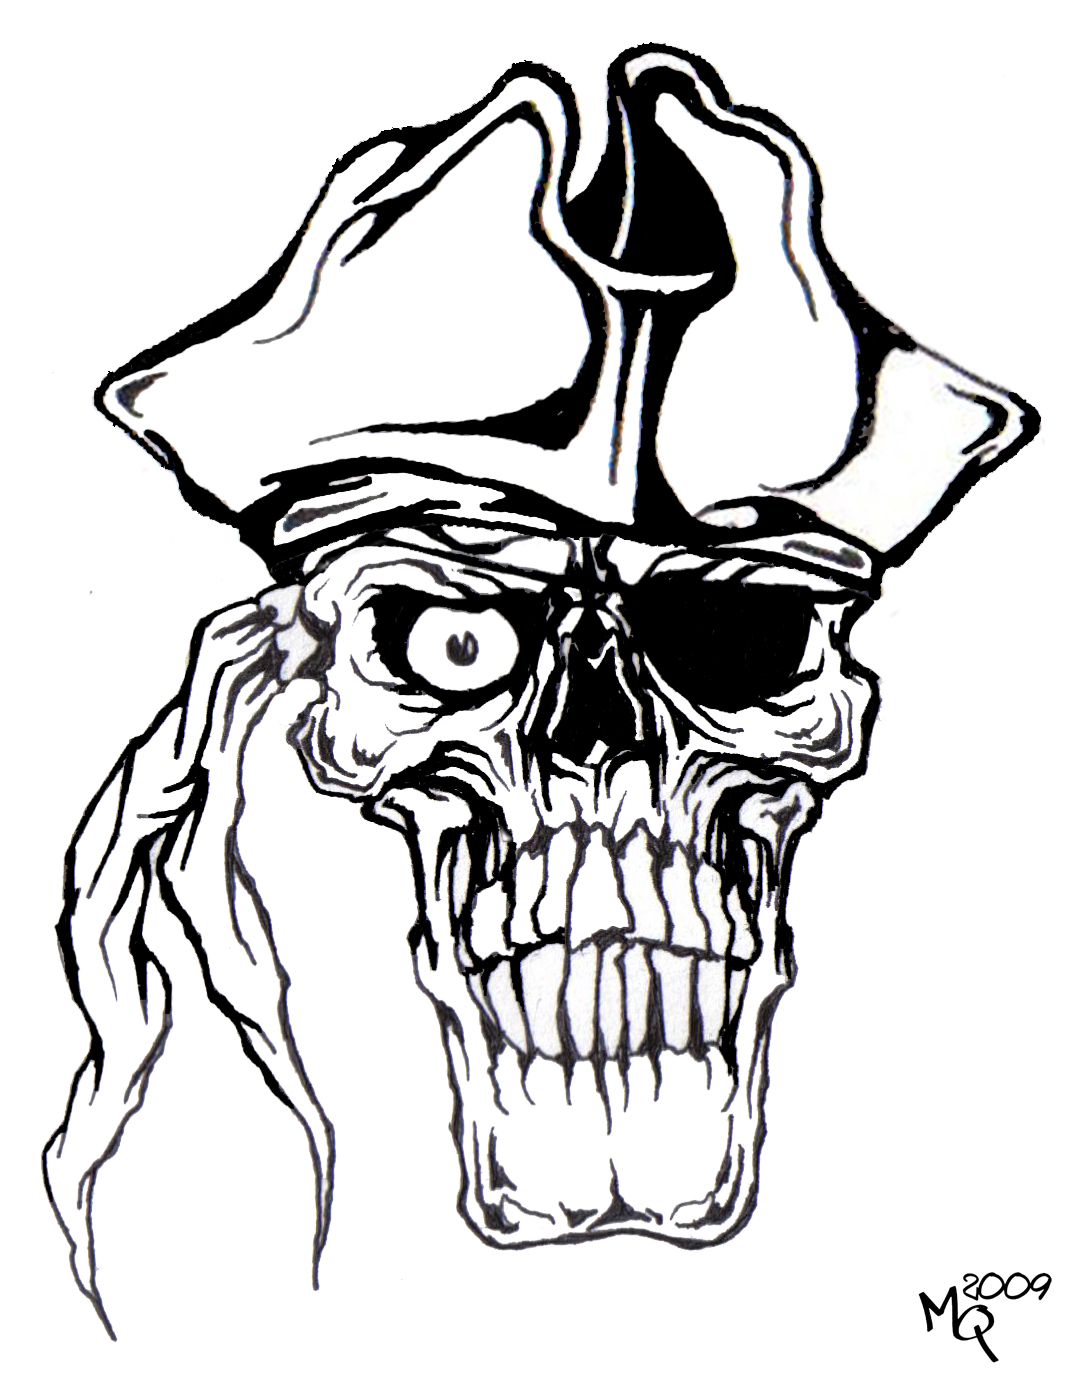 Pirate Skull 2 by QUINTdesigns on DeviantArt